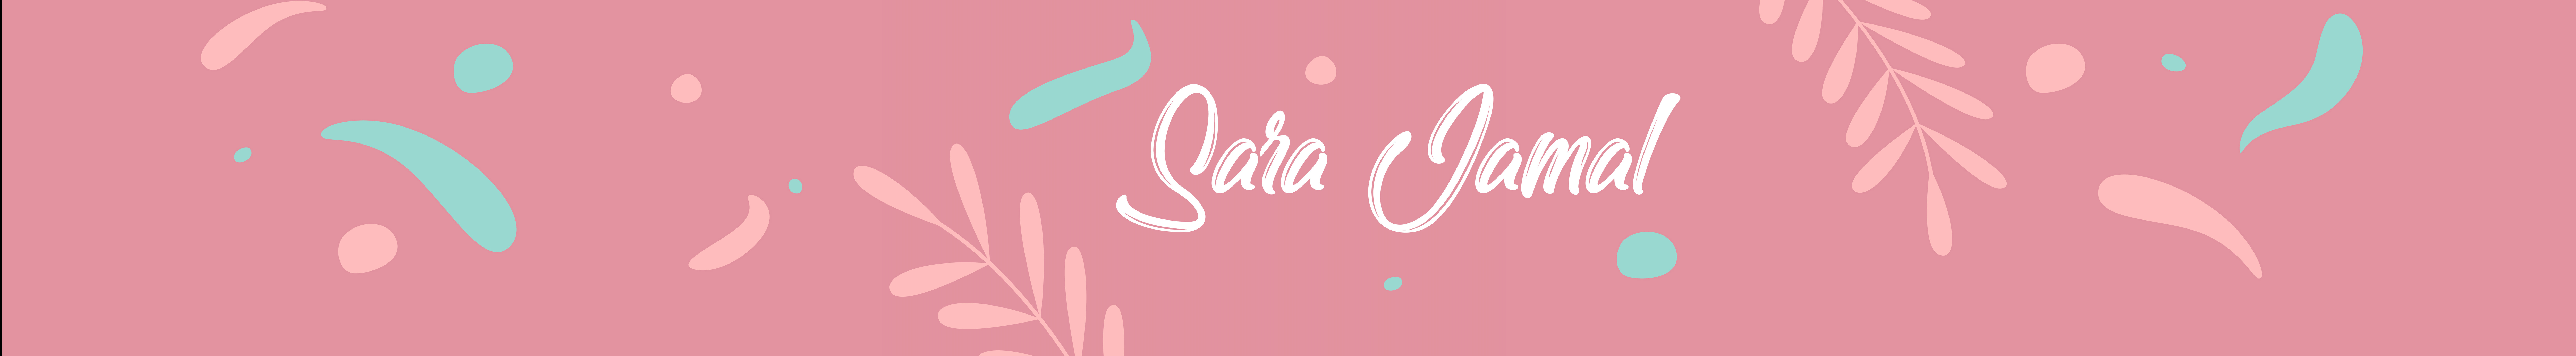 Bannière de profil de Sara Jamal